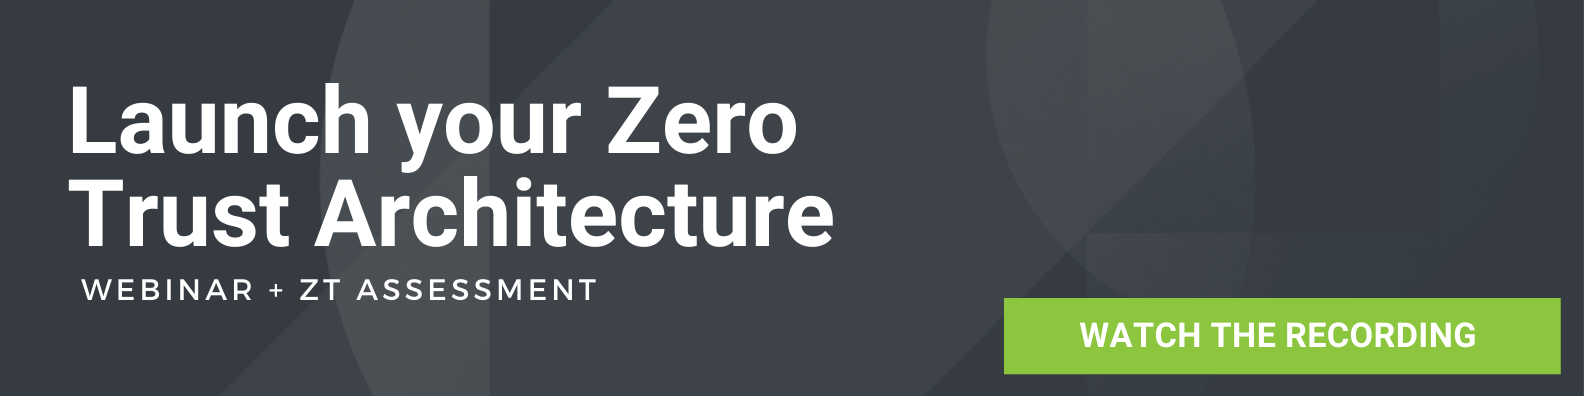 Launching your Zero Trust Architecture